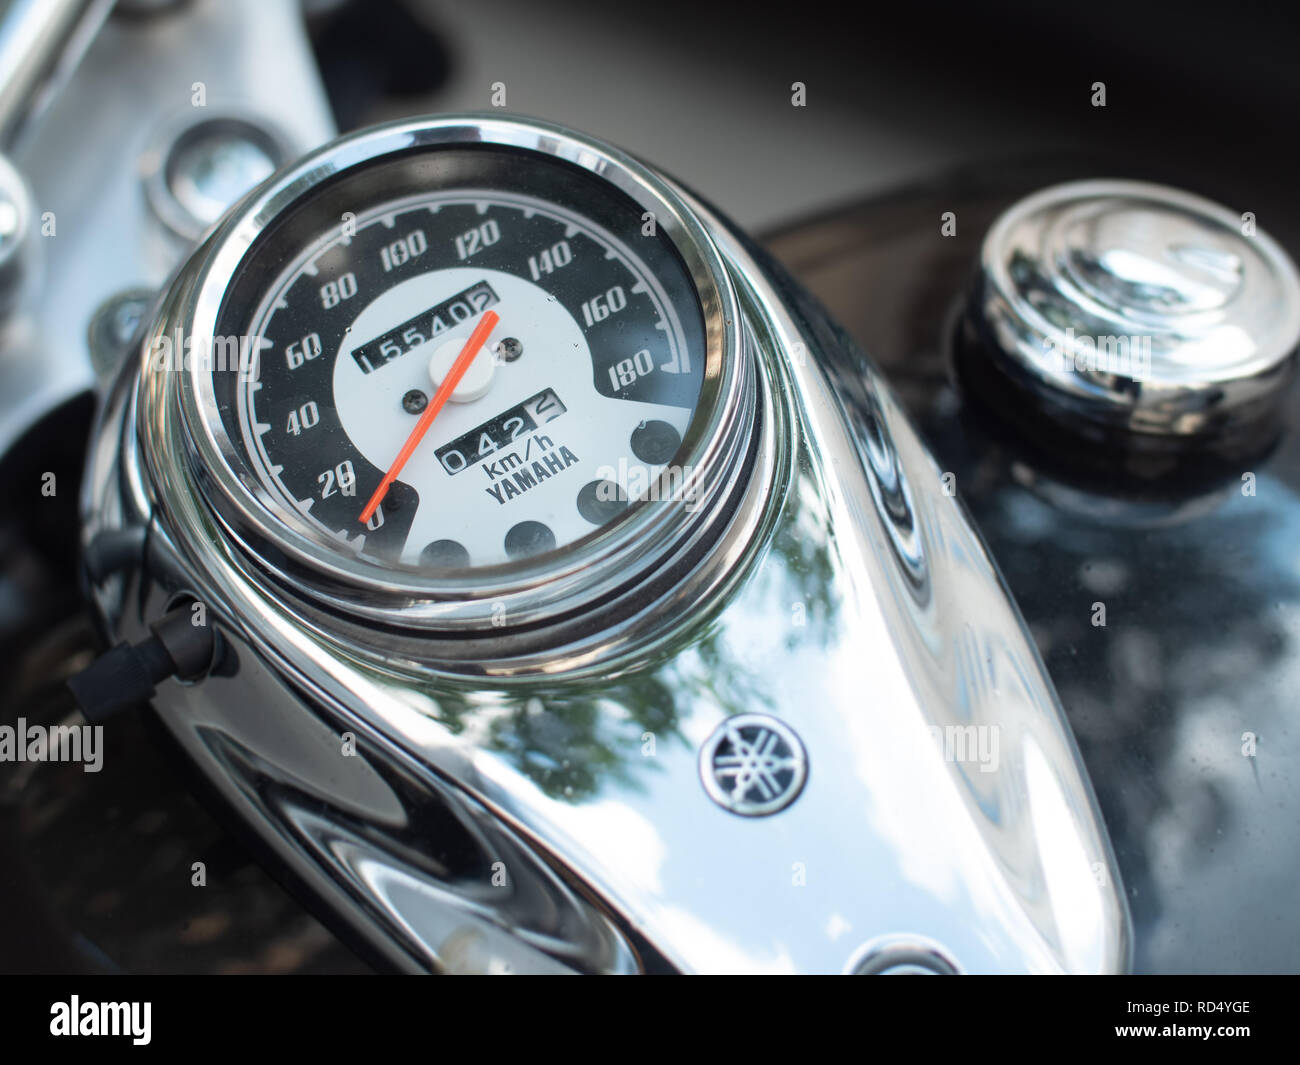 Motorrad tacho -Fotos und -Bildmaterial in hoher Auflösung – Alamy